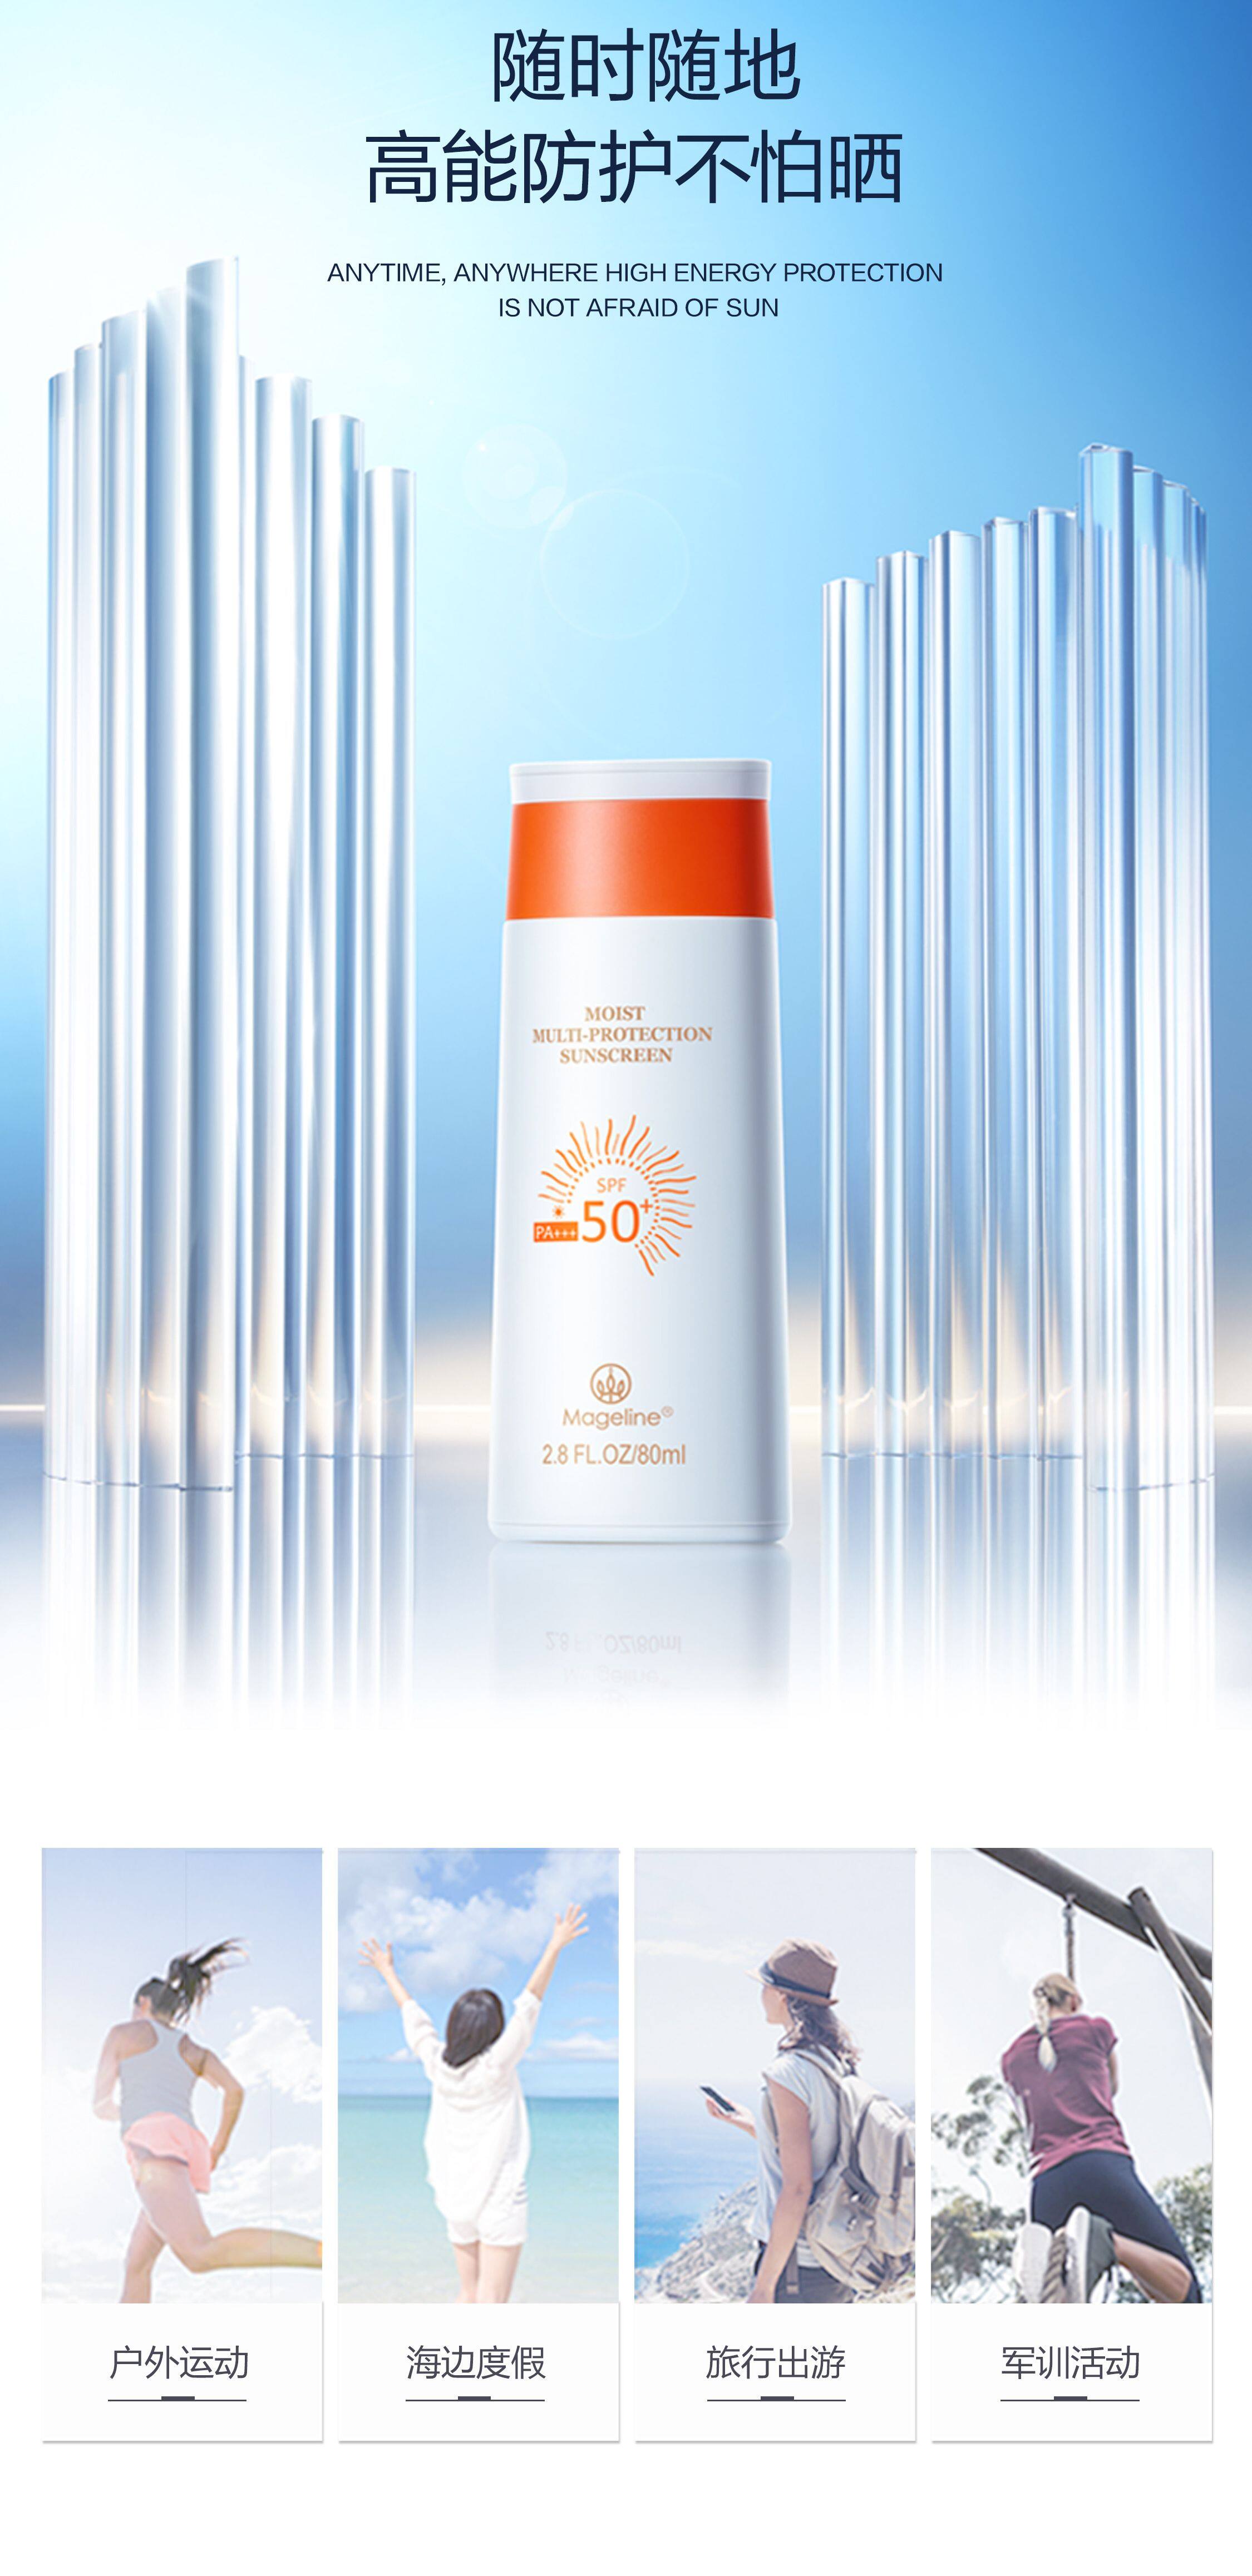 Mageline Moist Multi-Protection Sunscreen SPF50/PA+++